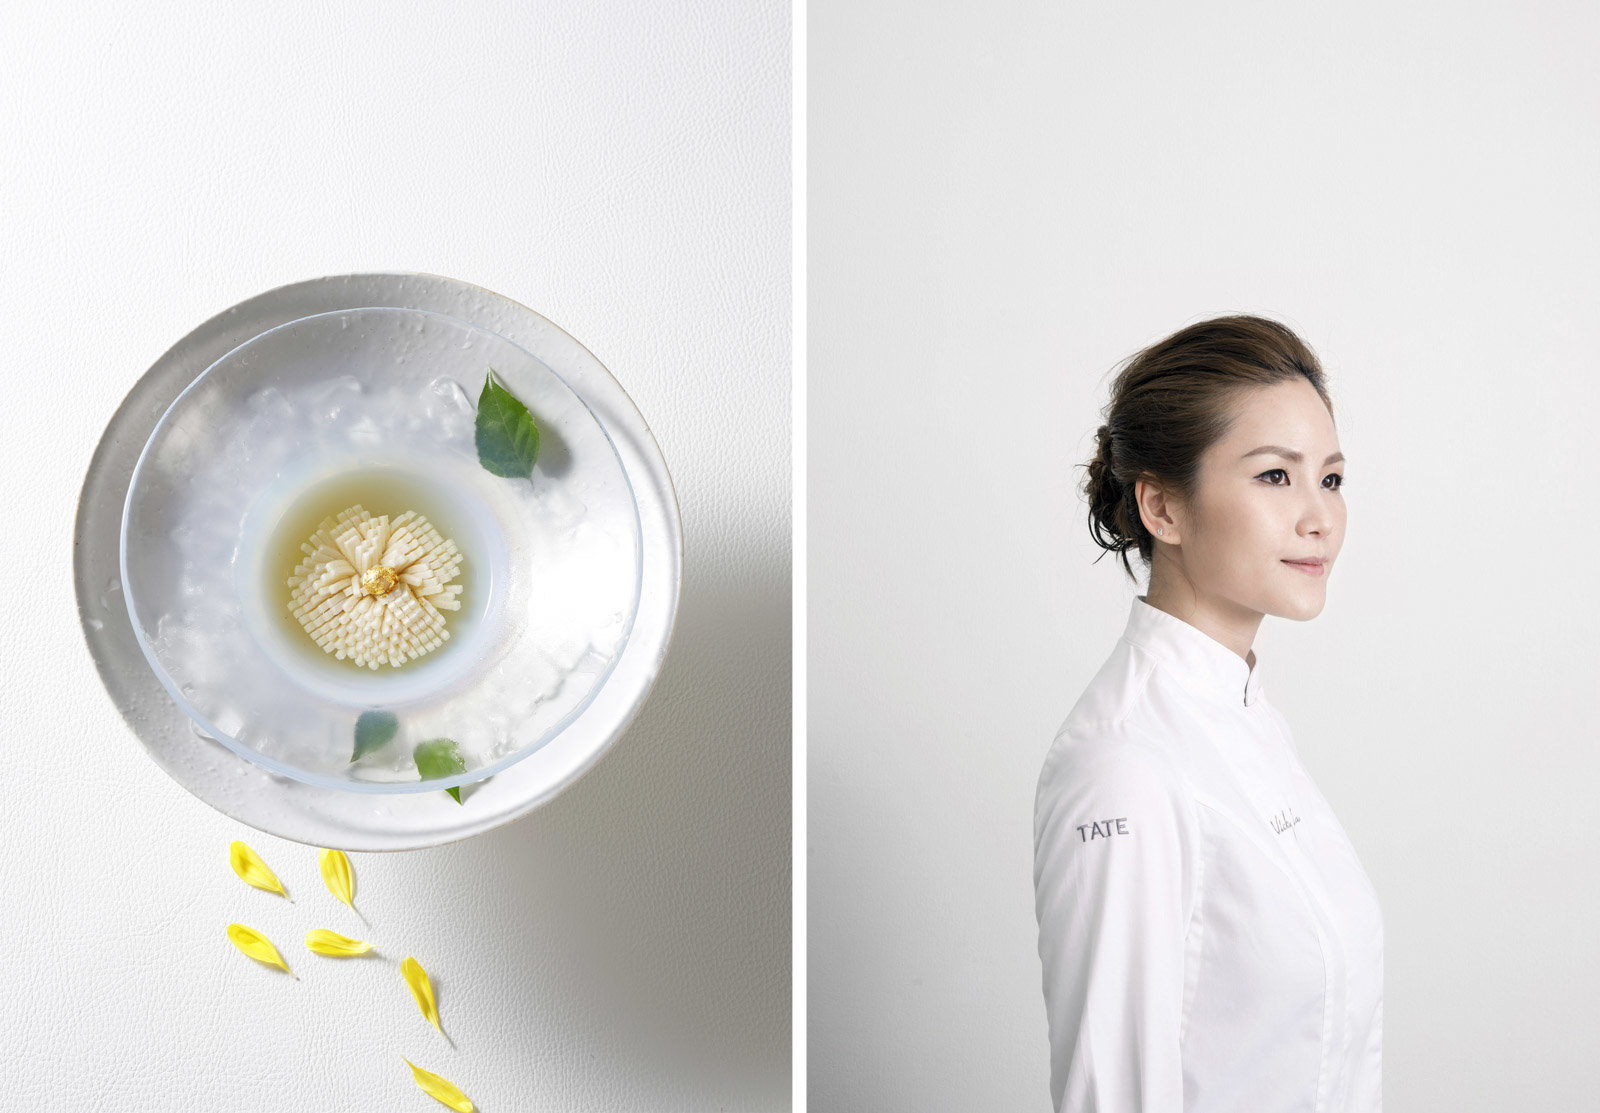 Hong Kong female Chefs, Vicky Lau